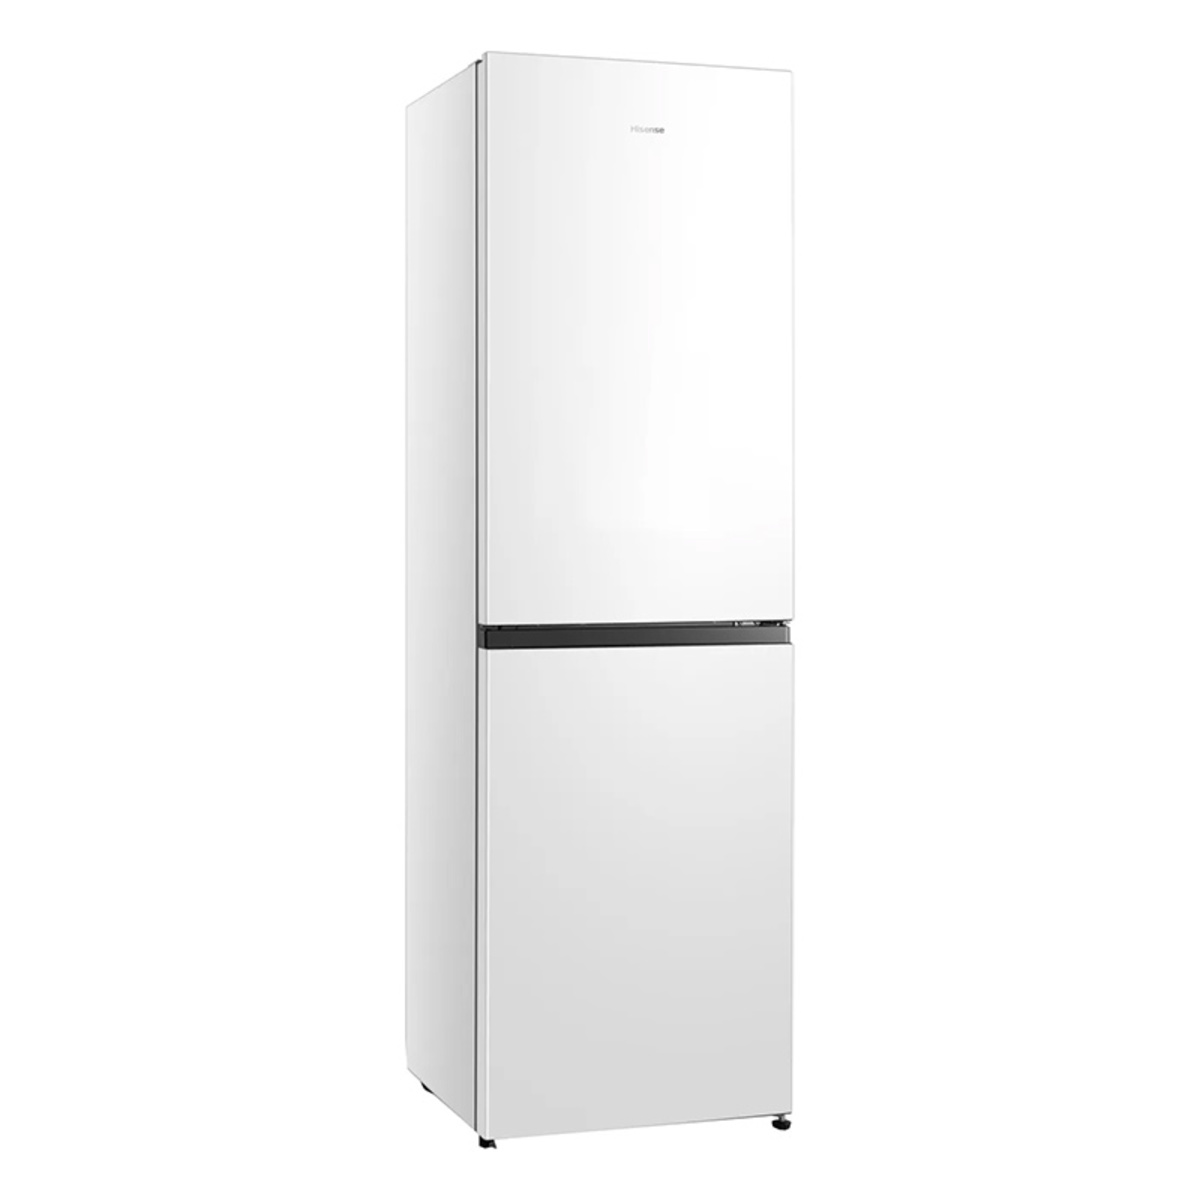 Hisense RB327N4BWE E Rated 55cm Freestanding Fridge Freezer in White